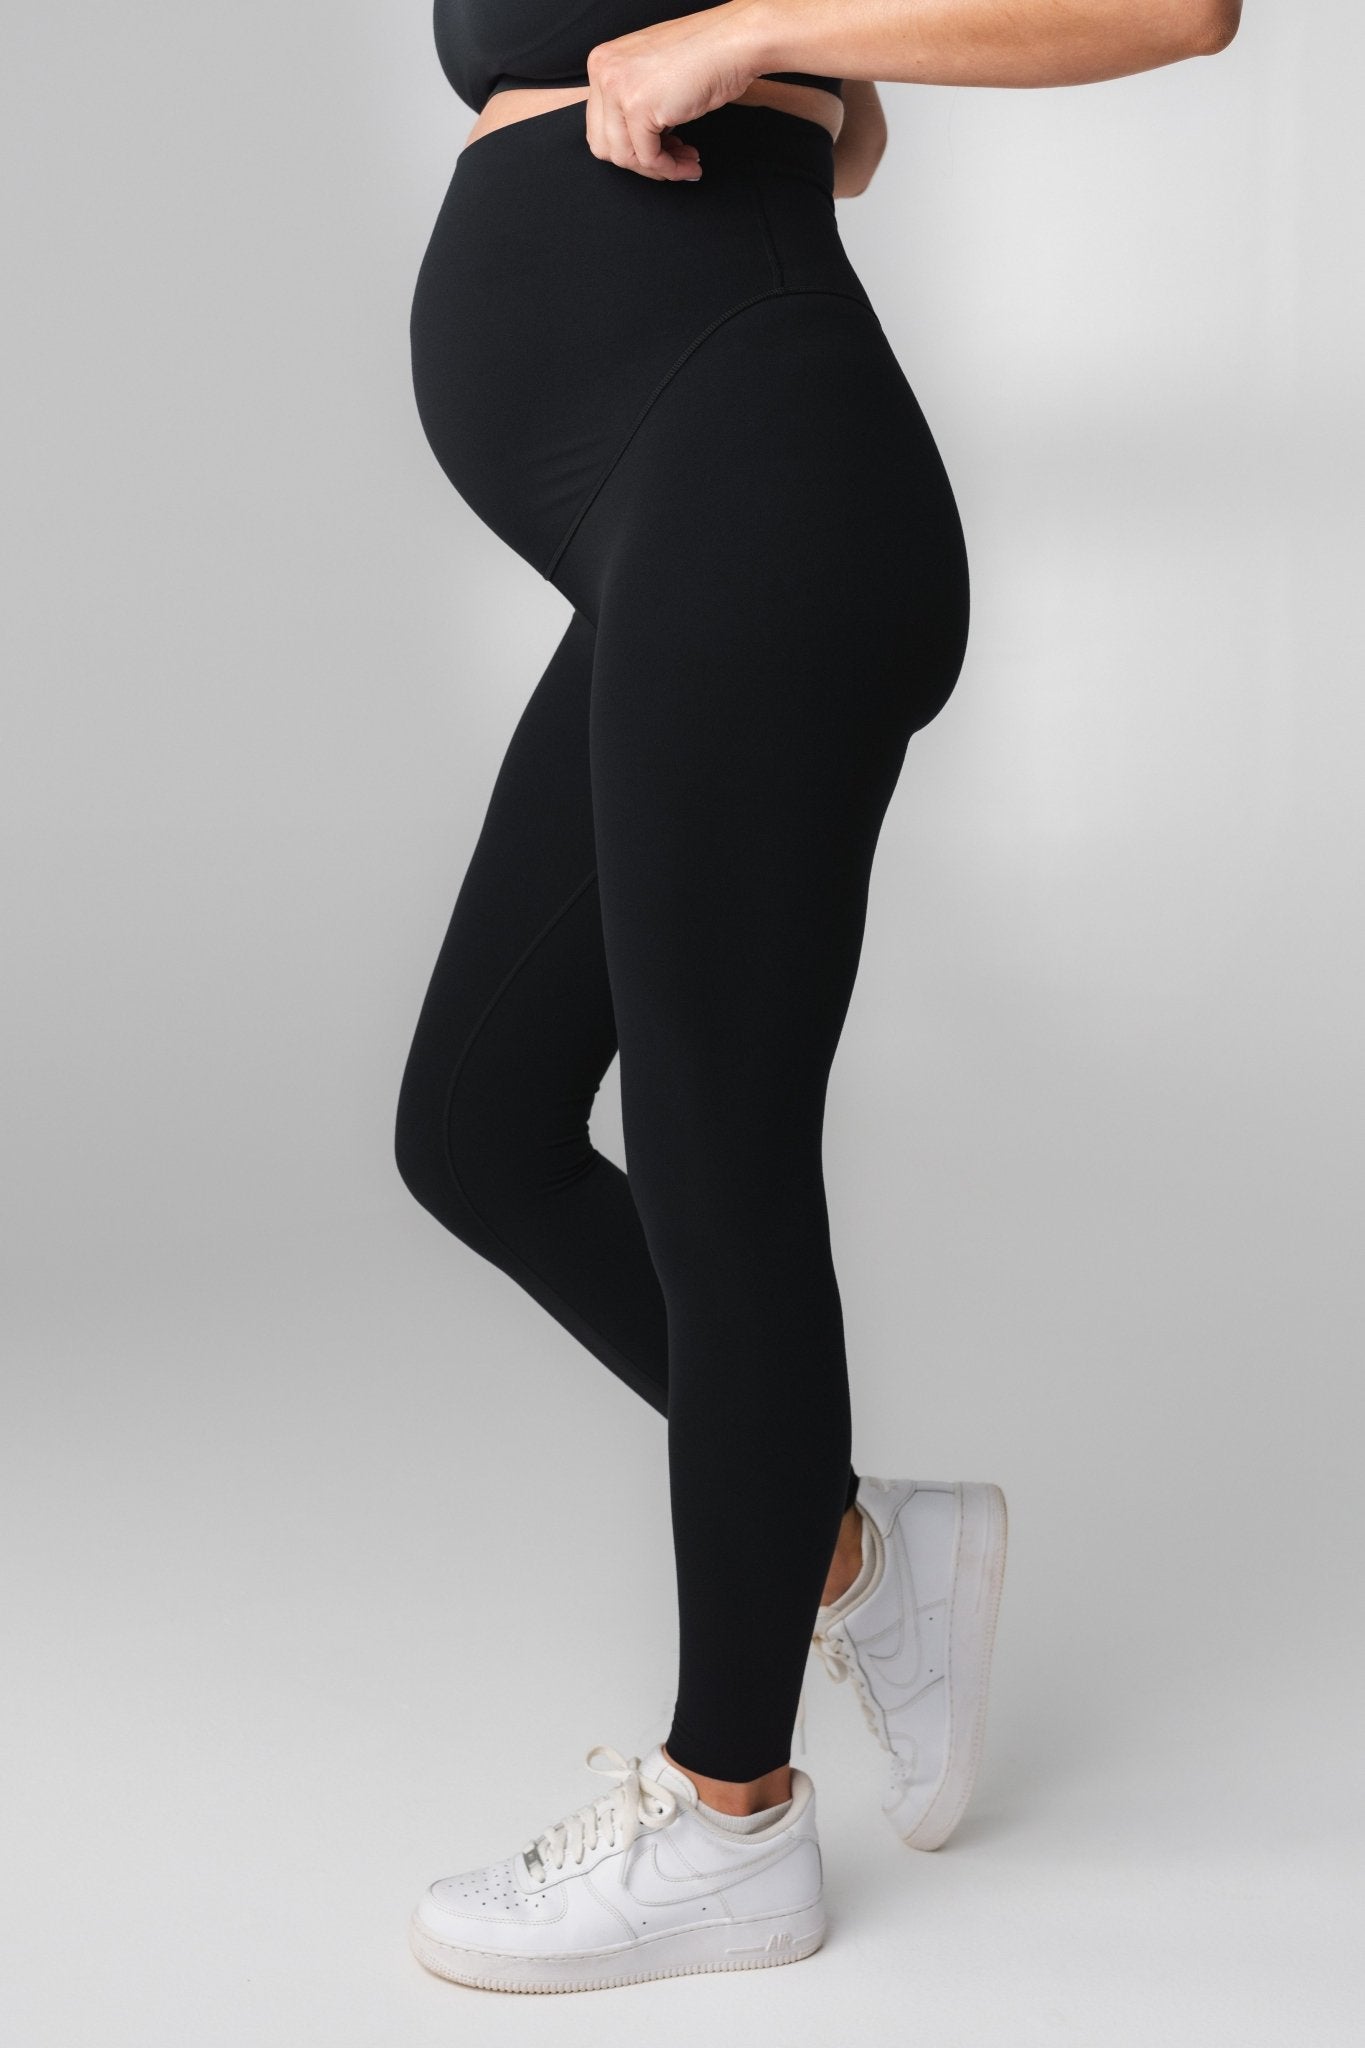 HOFISH Womens Maternity Leggings Pregnancy Yoga Pants Active Wear Workout  Leggings